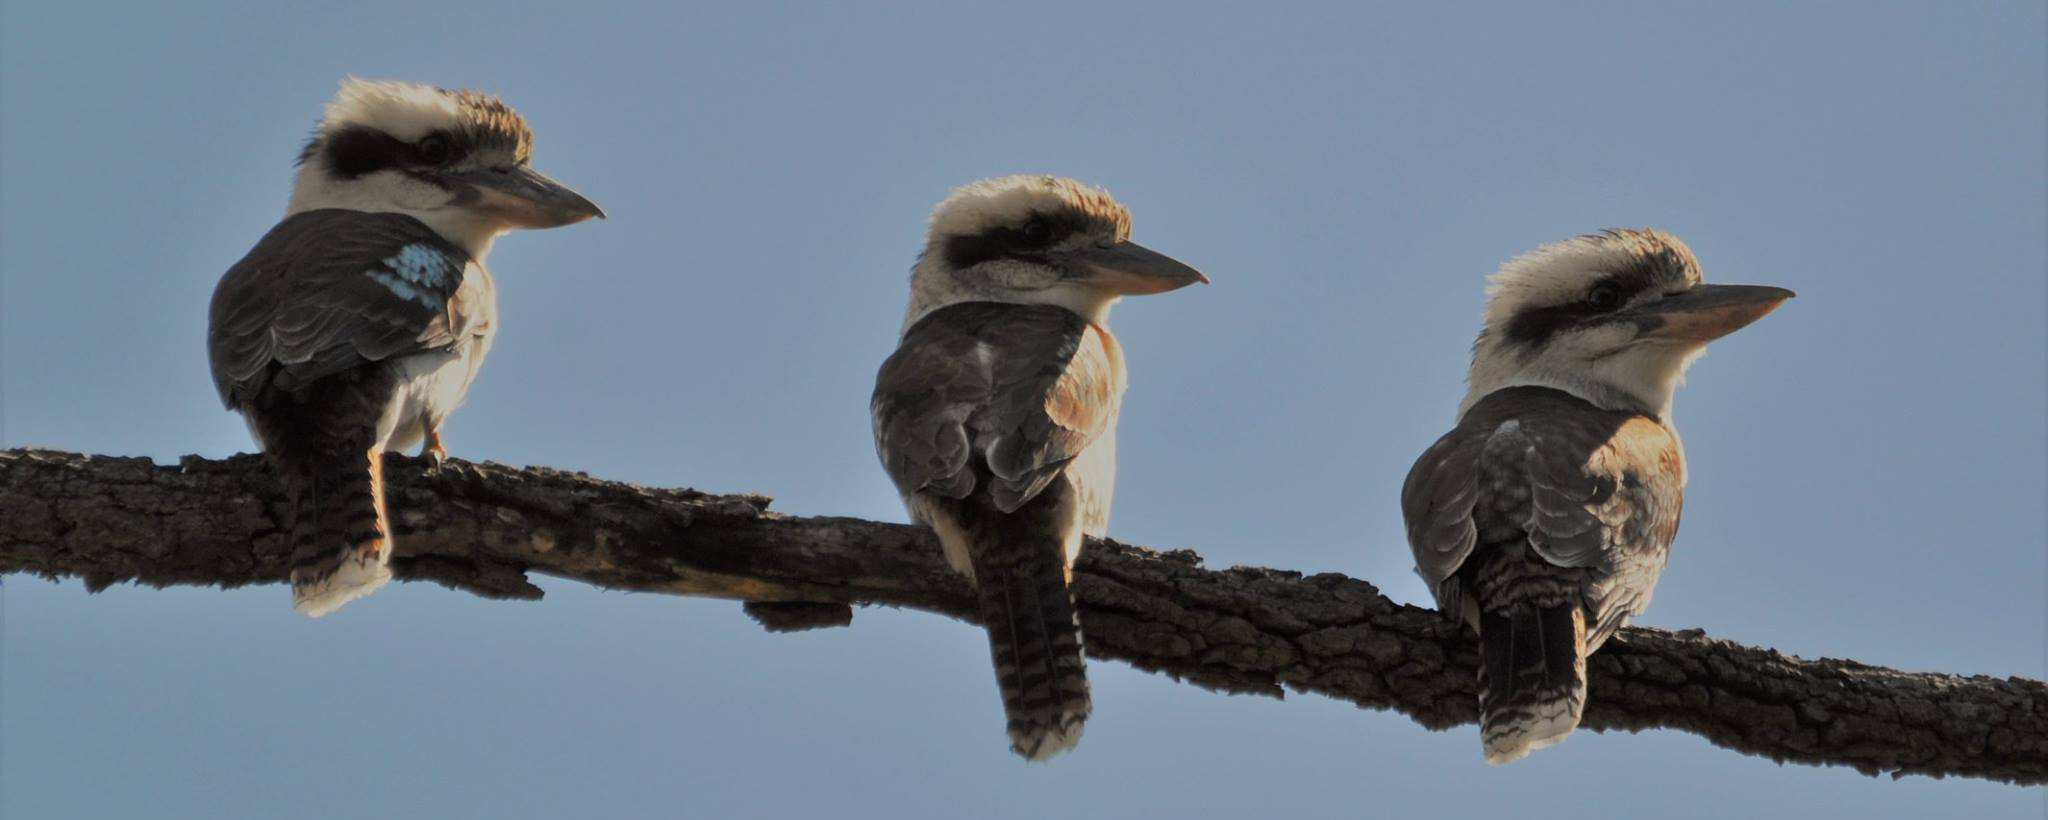 Three Kookaburras horizontal